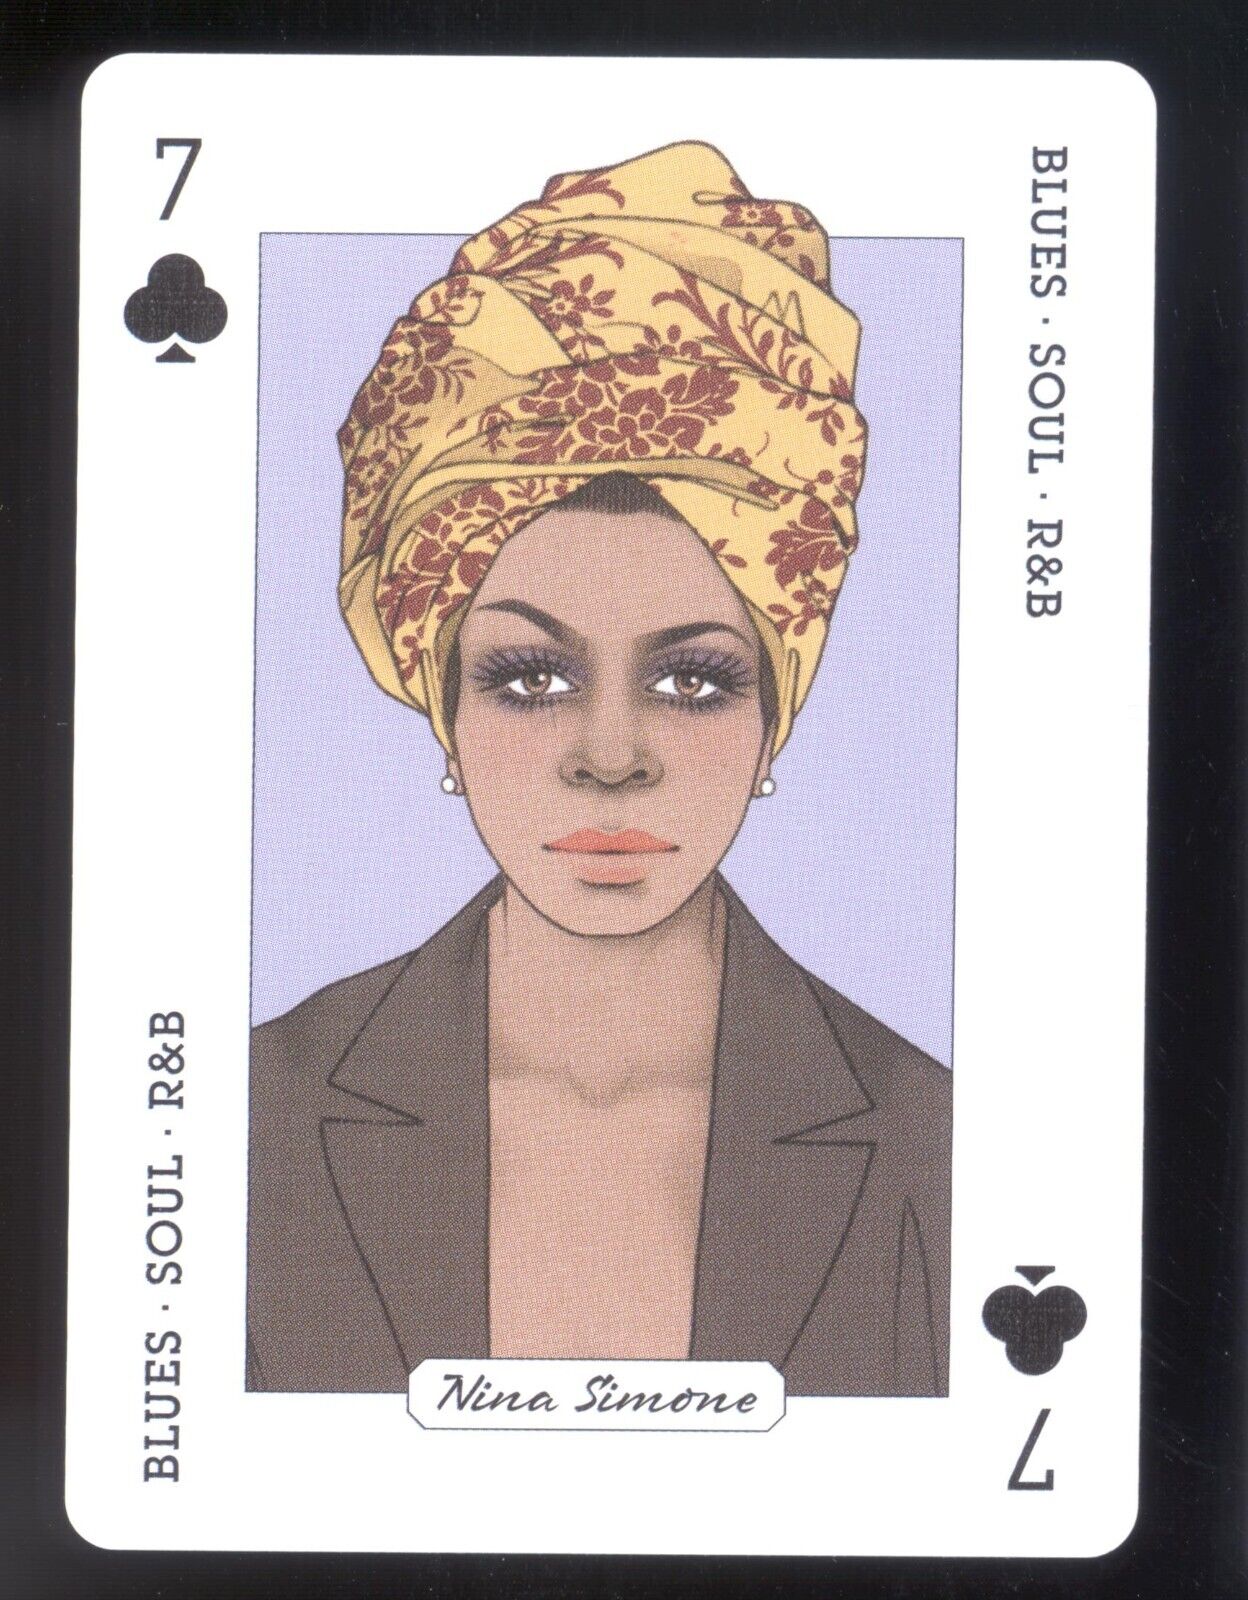 Nina Simone Music Genius Playing Trading Card 2018 Mint Condition